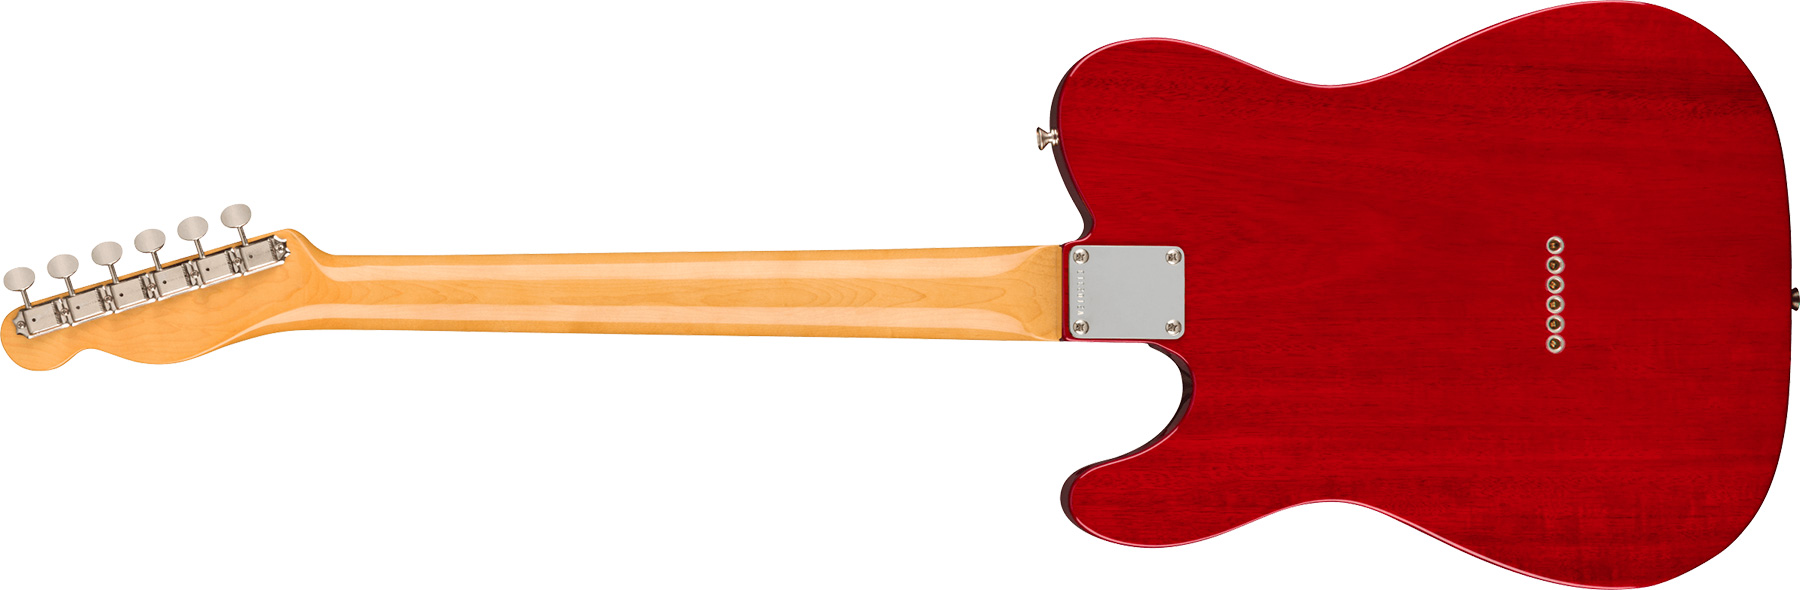 Fender Tele 1963 American Vintage Ii Usa 2s Ht Rw - Crimson Red Transparent - Tel shape electric guitar - Variation 1